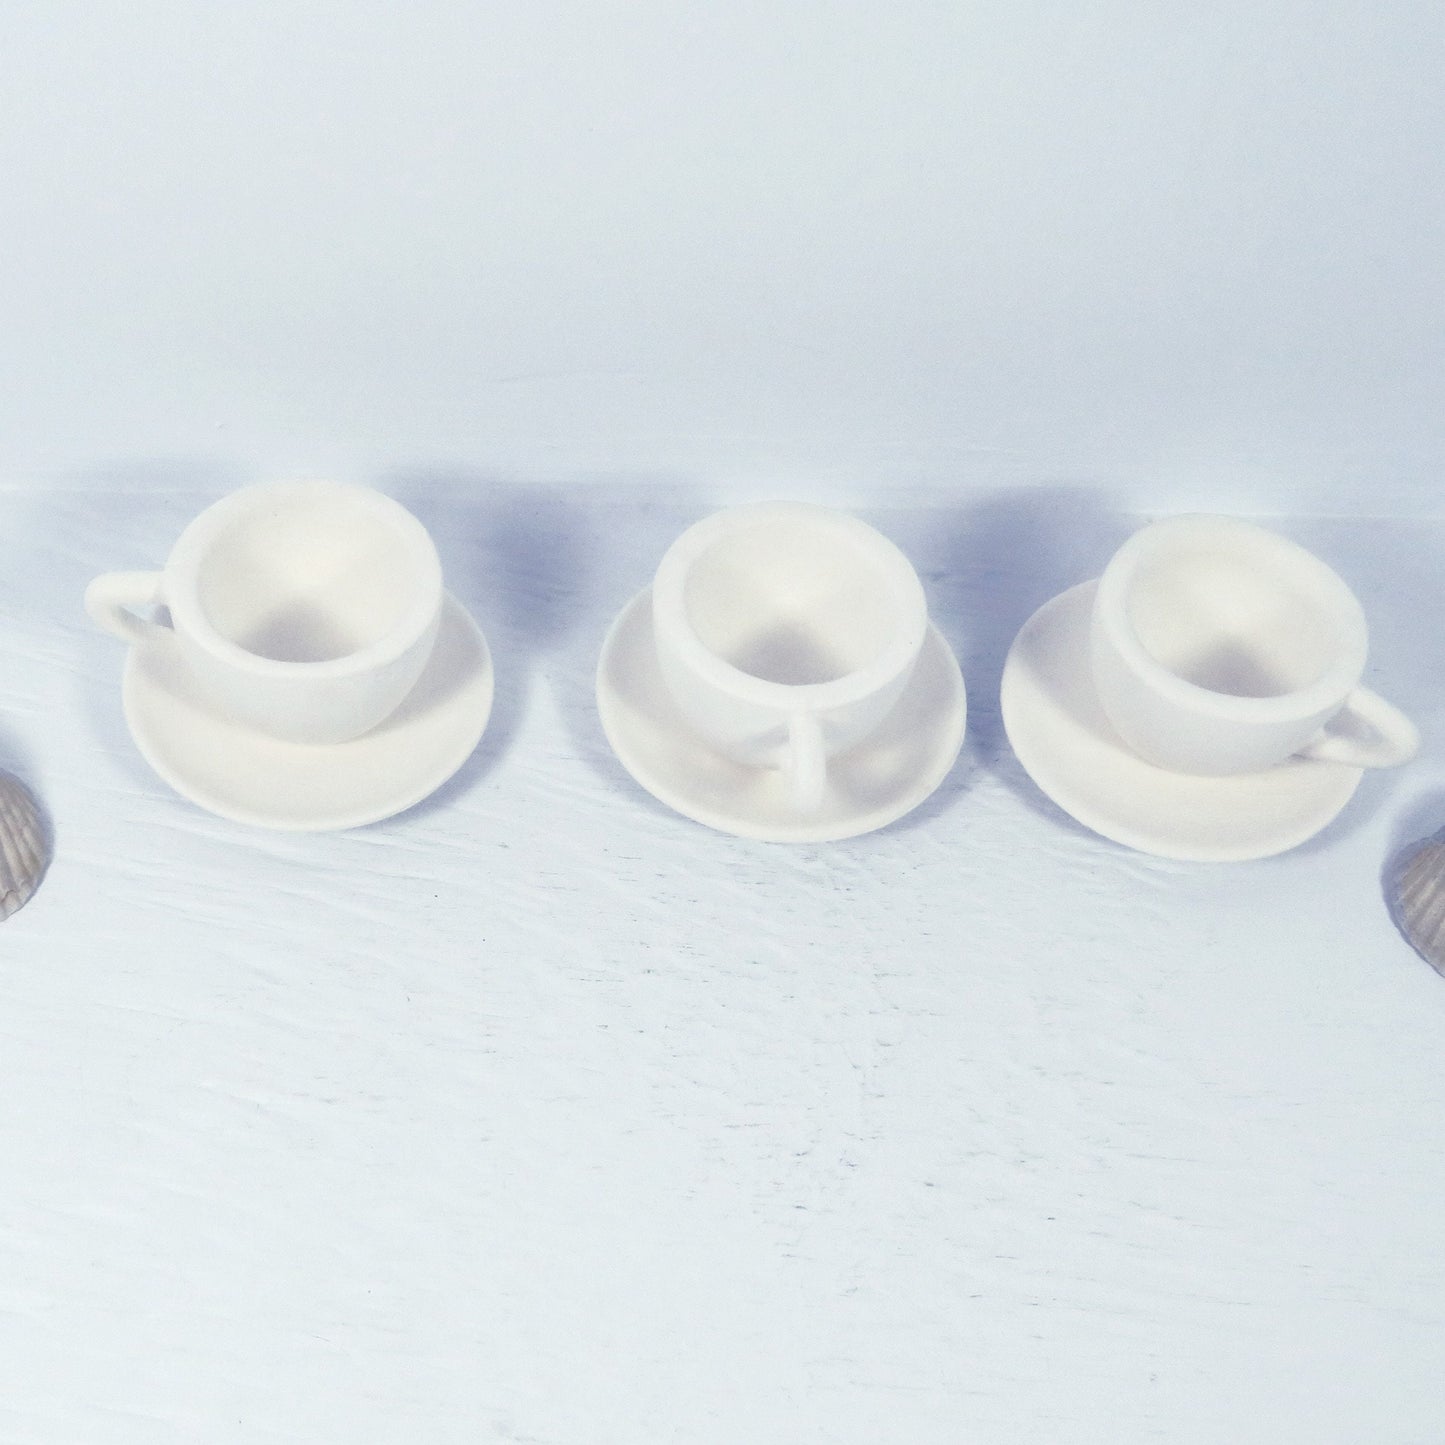 Miniature Unpainted Ceramic Tea Set / Paint it Yourself Tea Set / Ceramics to Paint / Paintable Ceramic Decor / Small Tea Pot and Cups